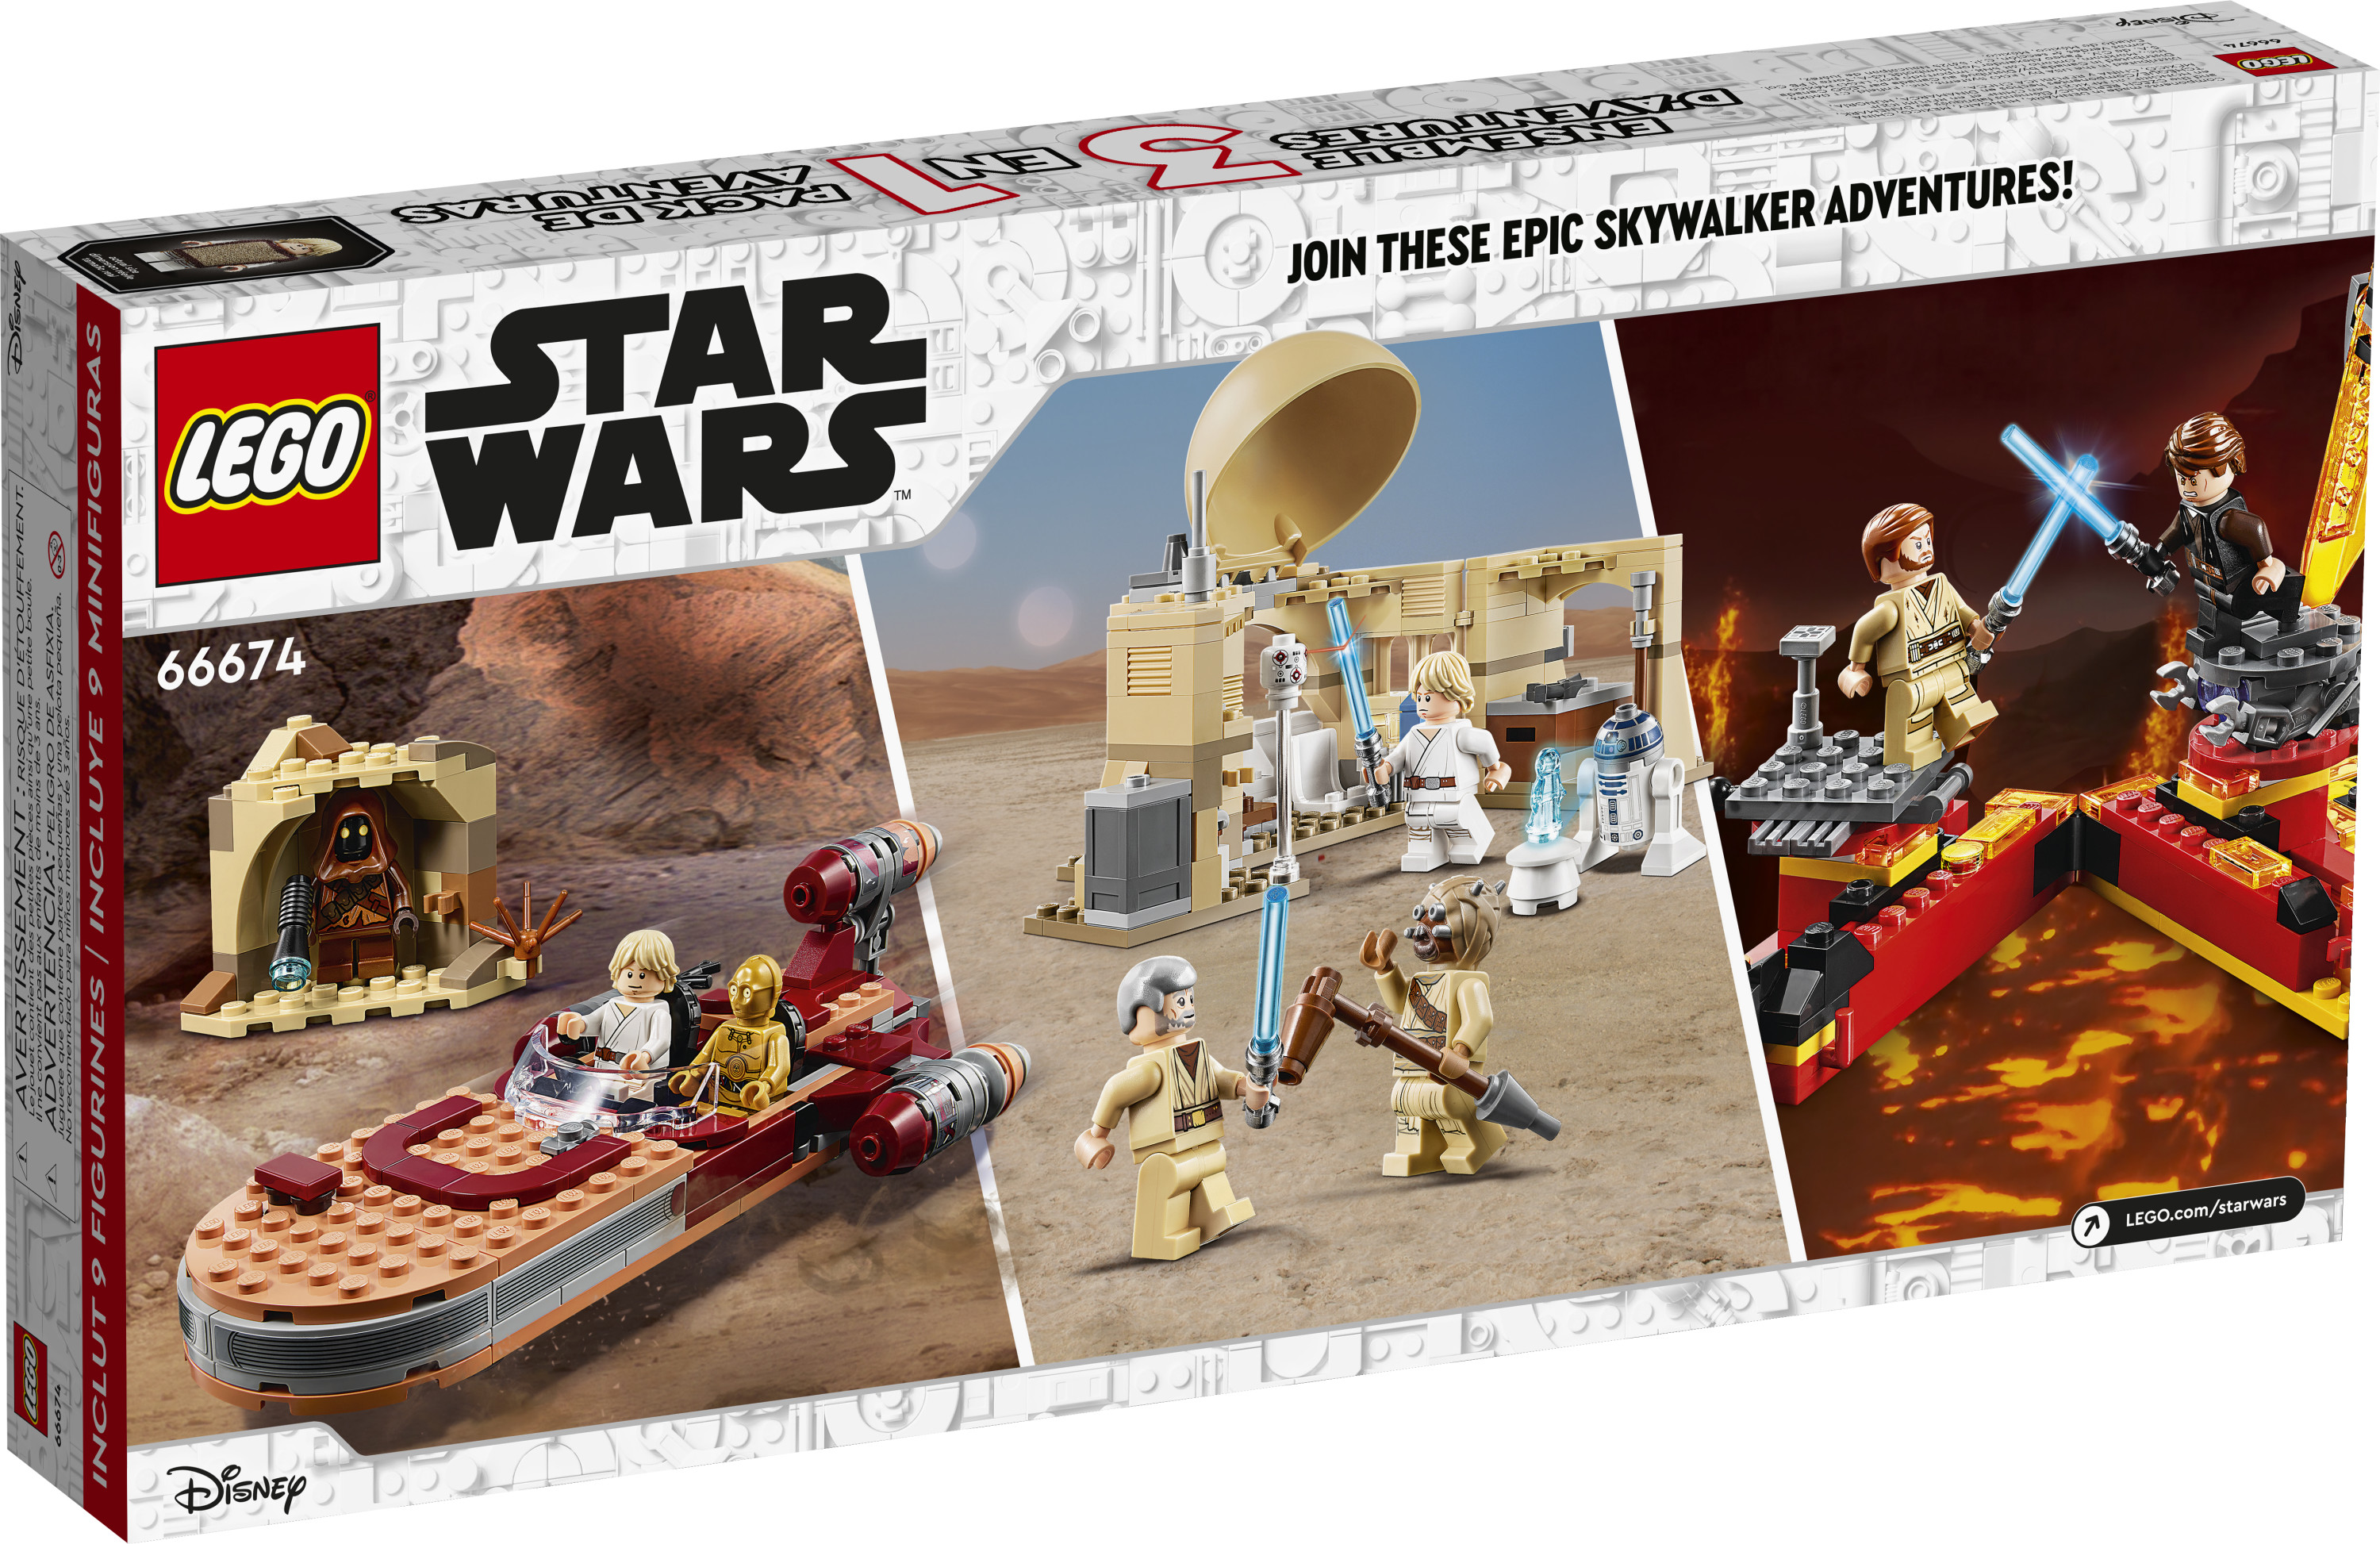 LEGO Star Wars Skywalker Adventures 66674 Building Set (644 Pieces) - image 3 of 3